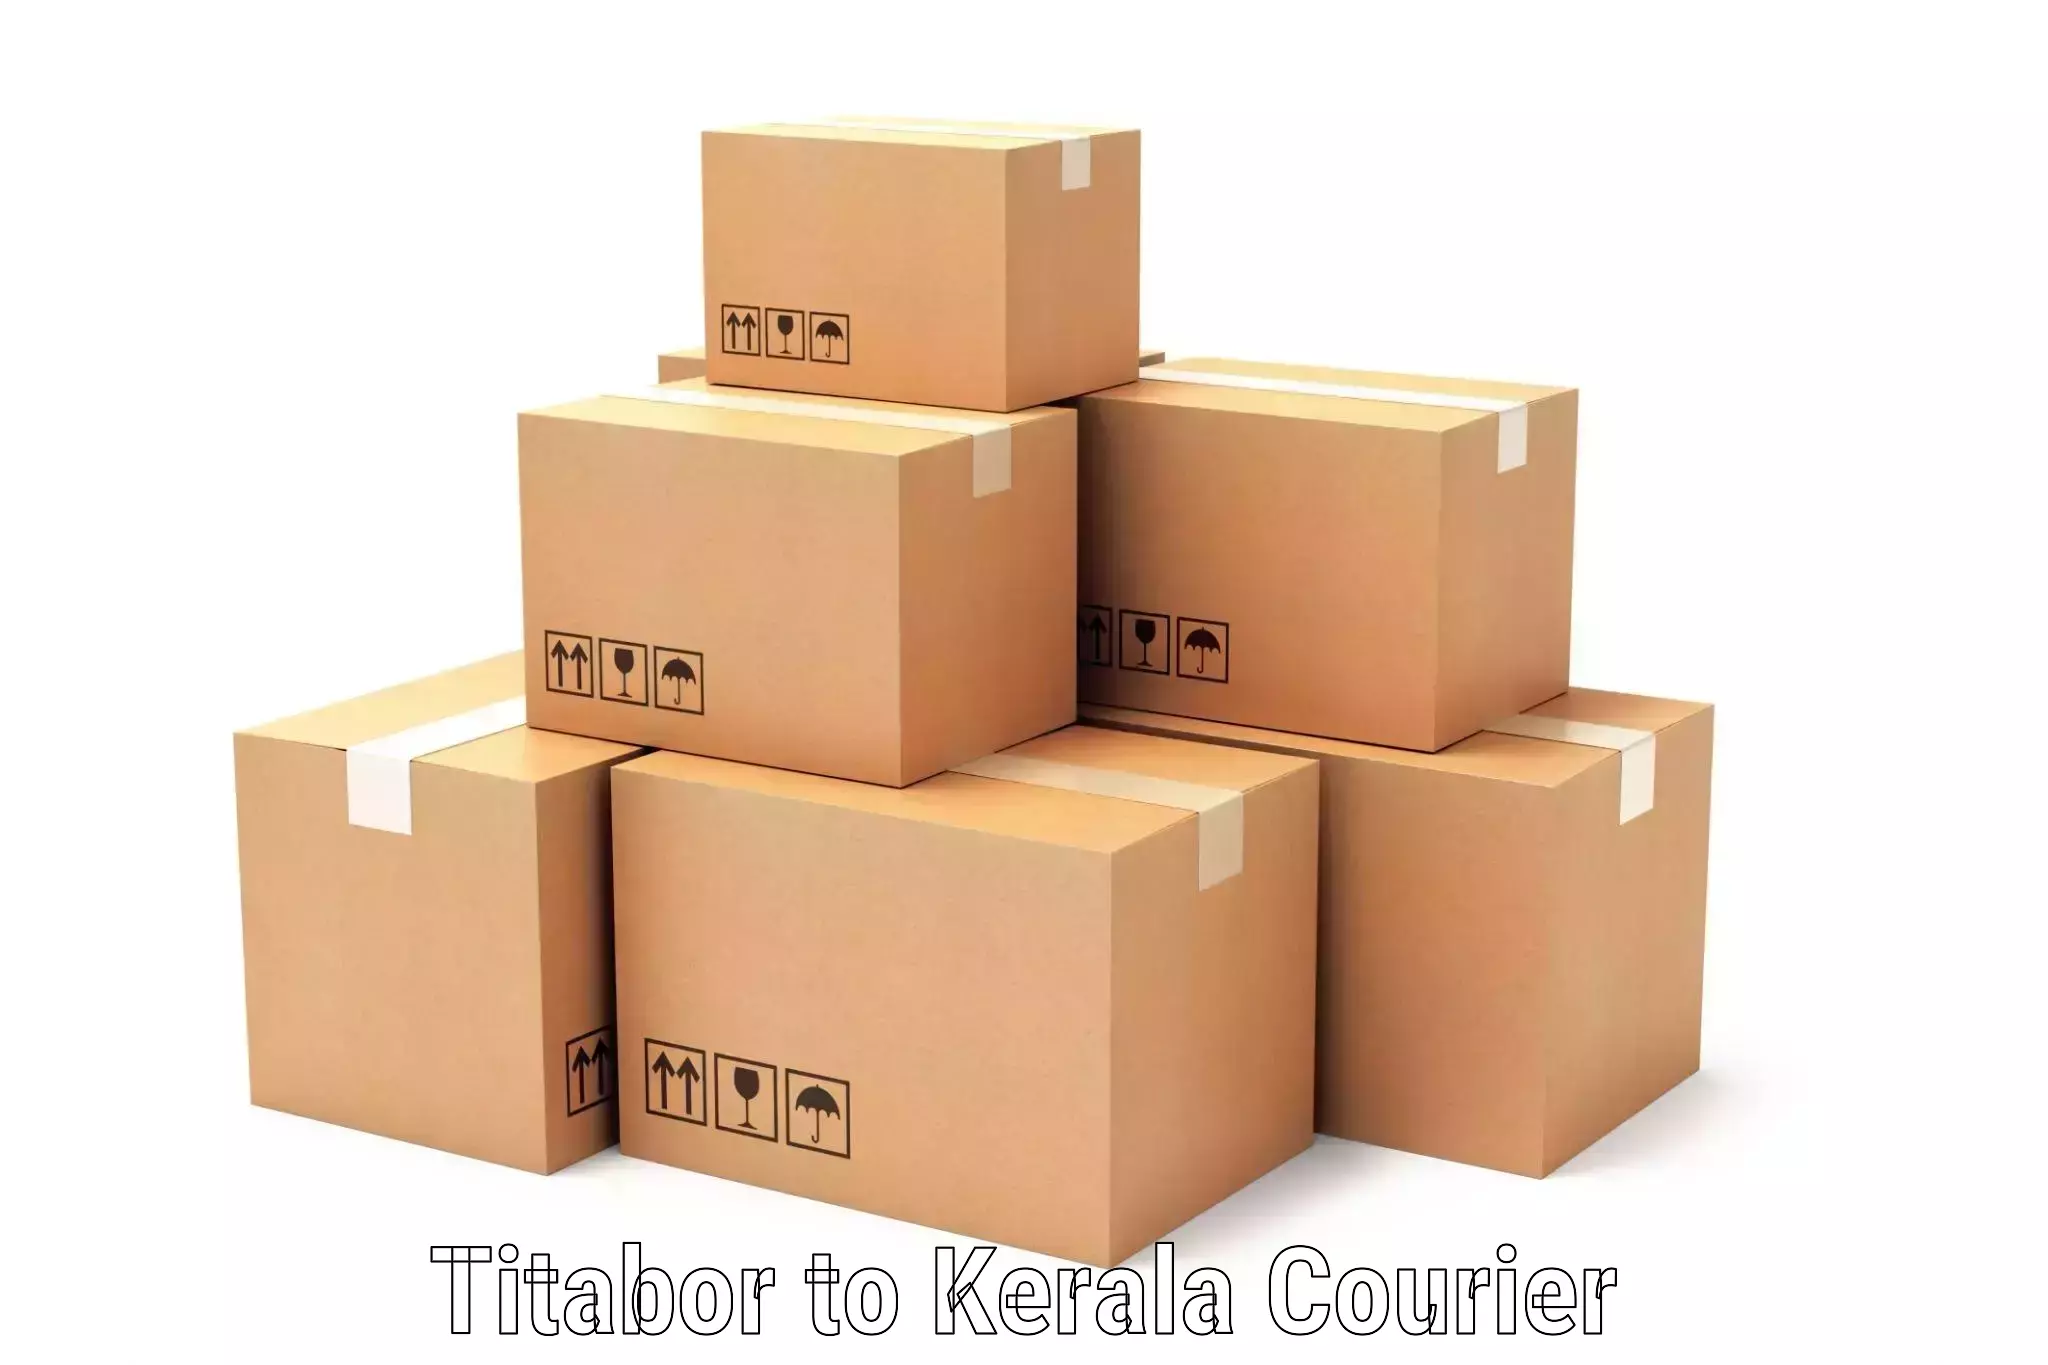 Efficient parcel delivery Titabor to Trivandrum